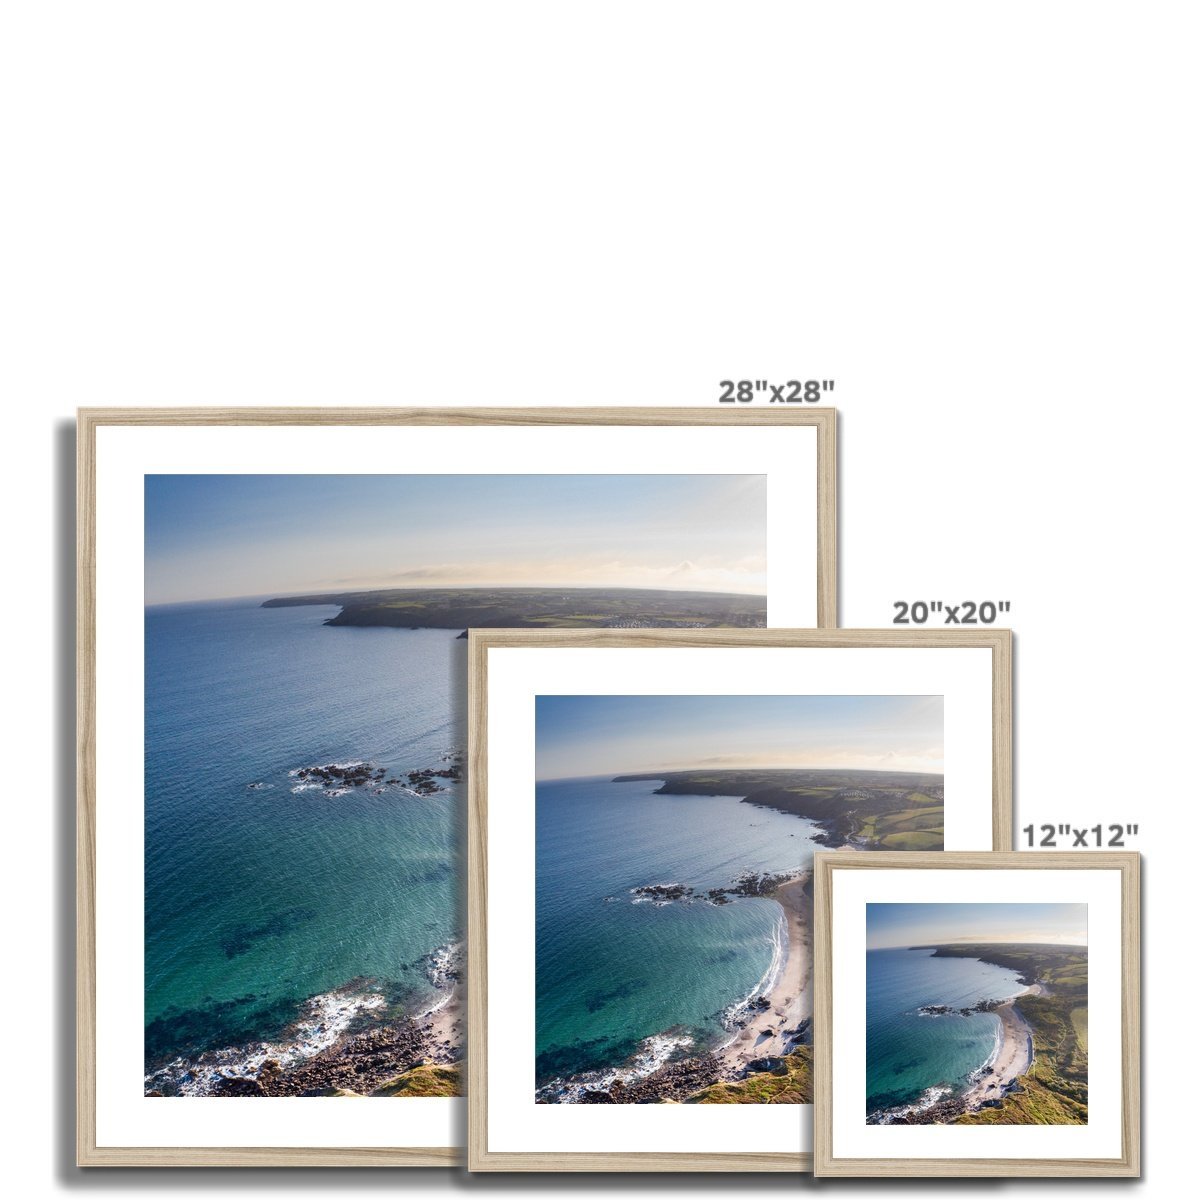 kennack sands frame sizes